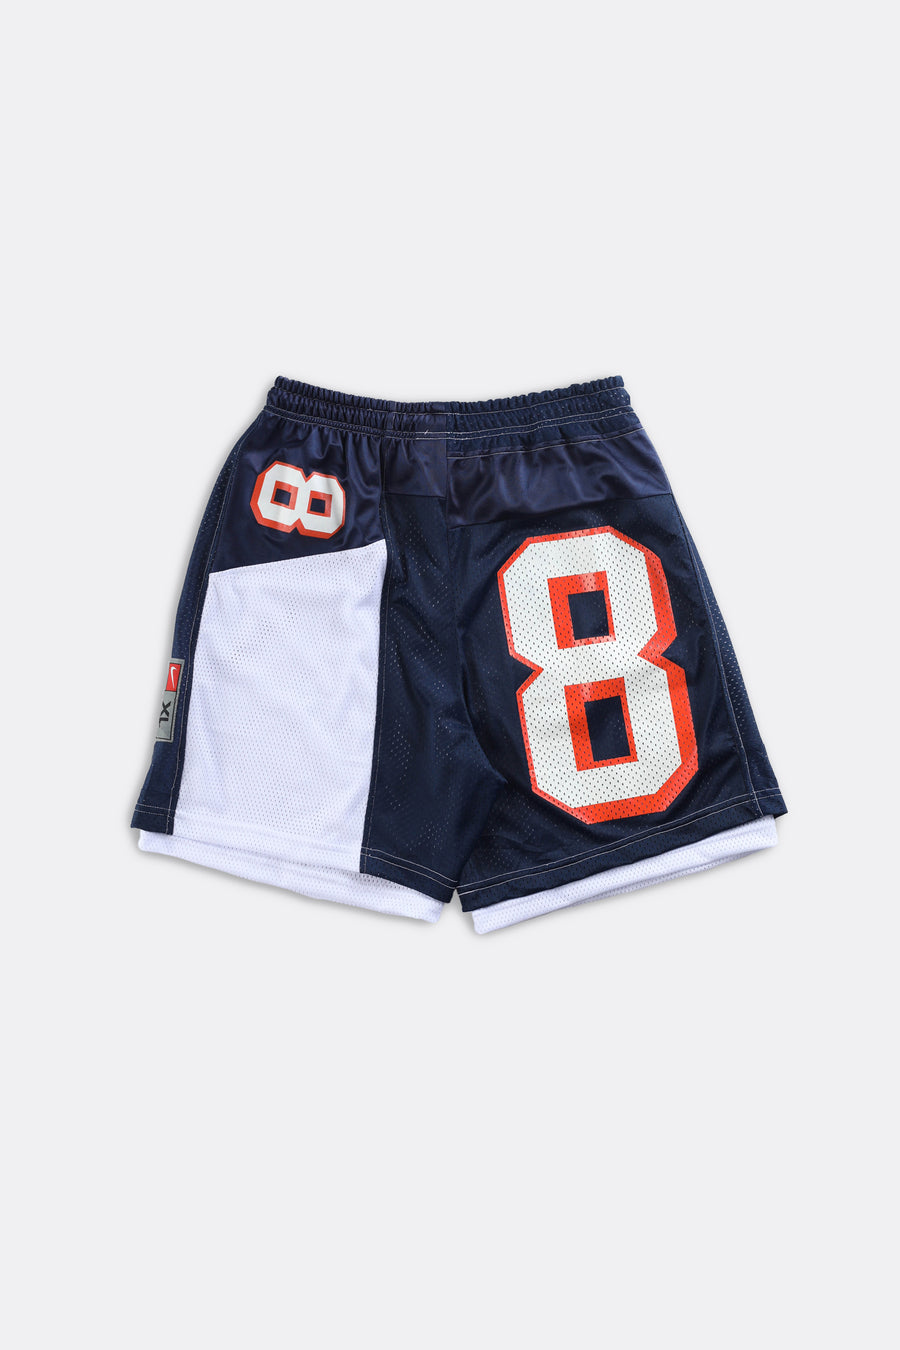 Unisex Rework Bears NFL Jersey Shorts - Women-L, Men-M